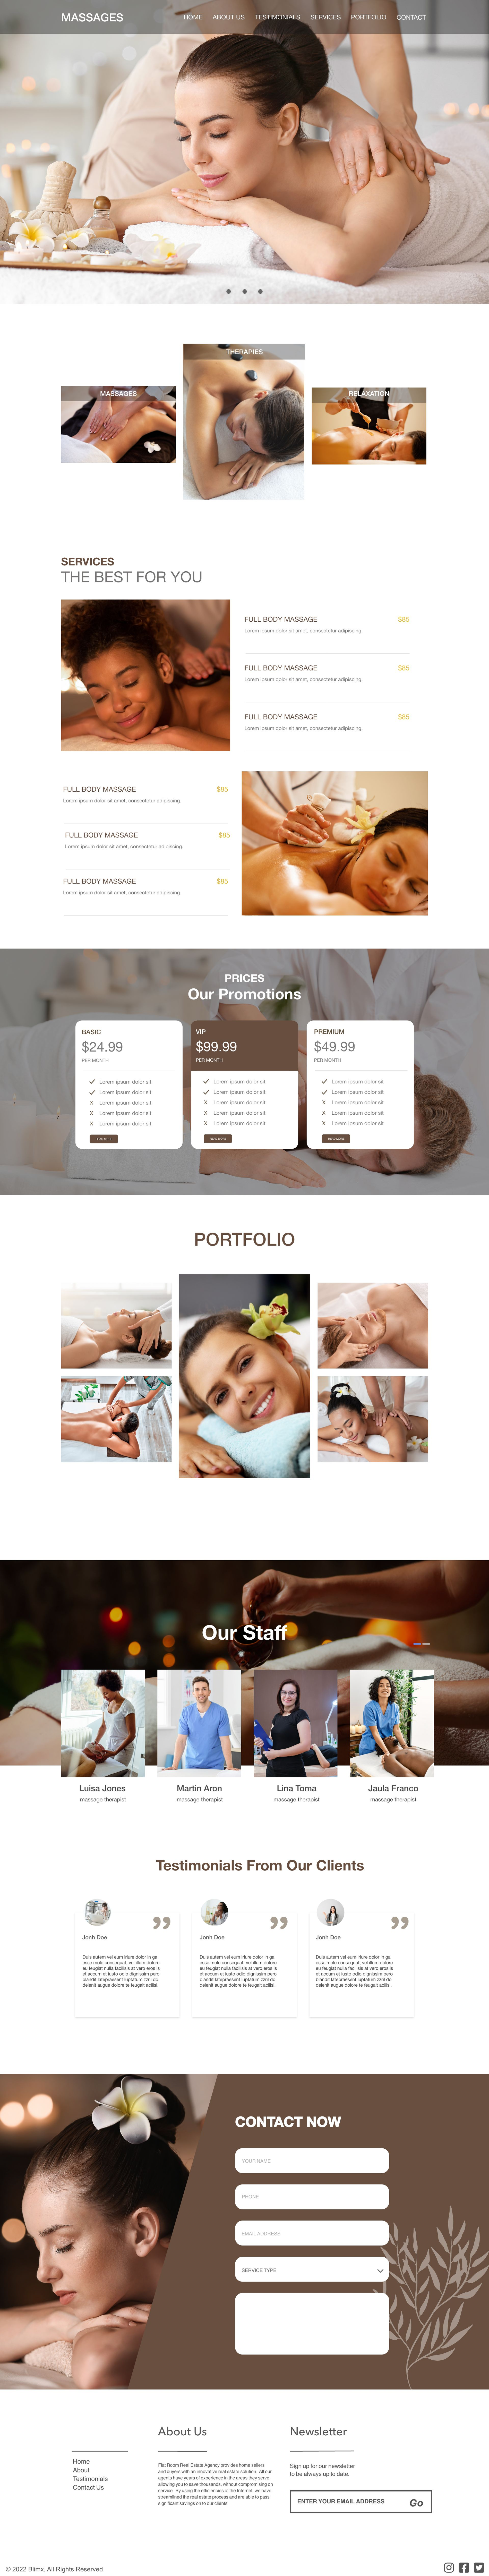 Massage Service Website Design